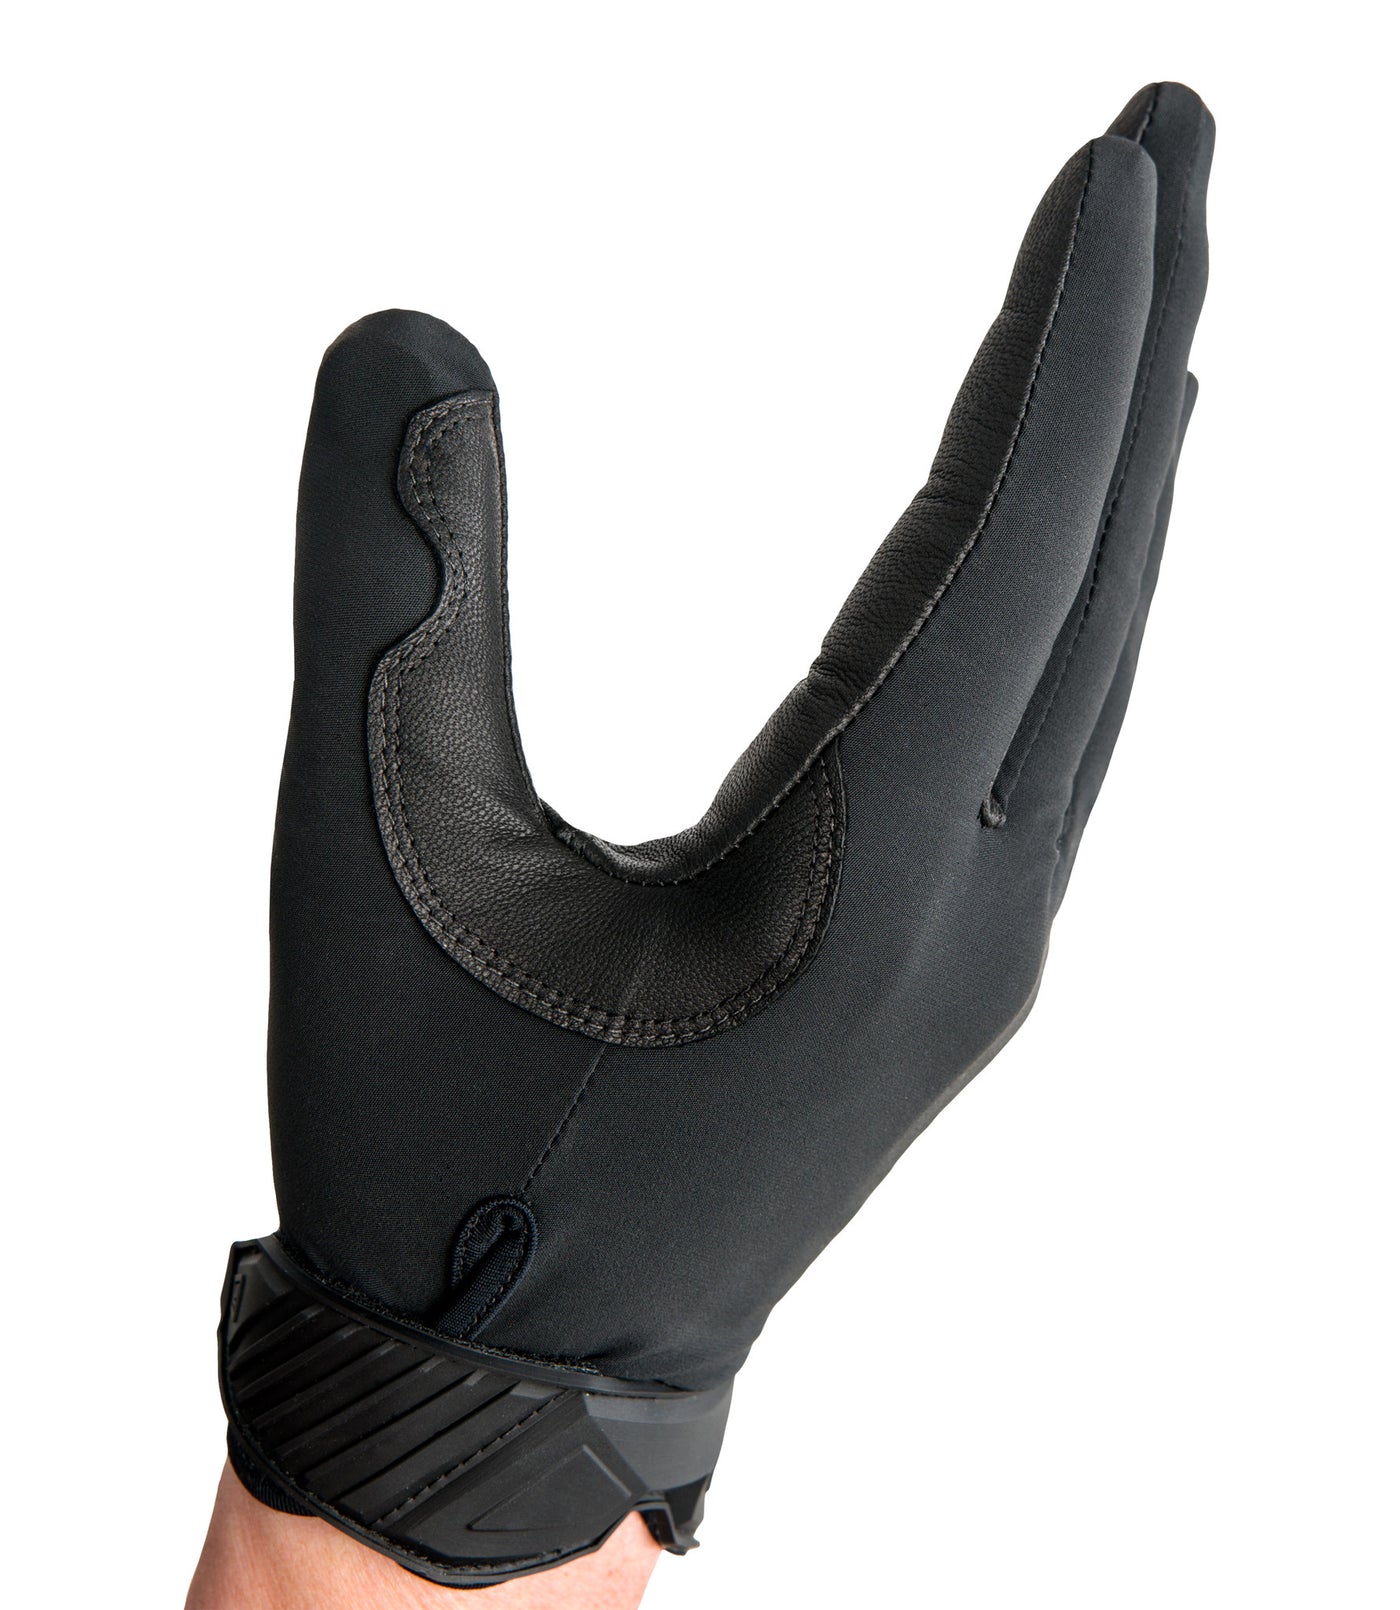 Men’s Lightweight Patrol Glove in Black U-Shape